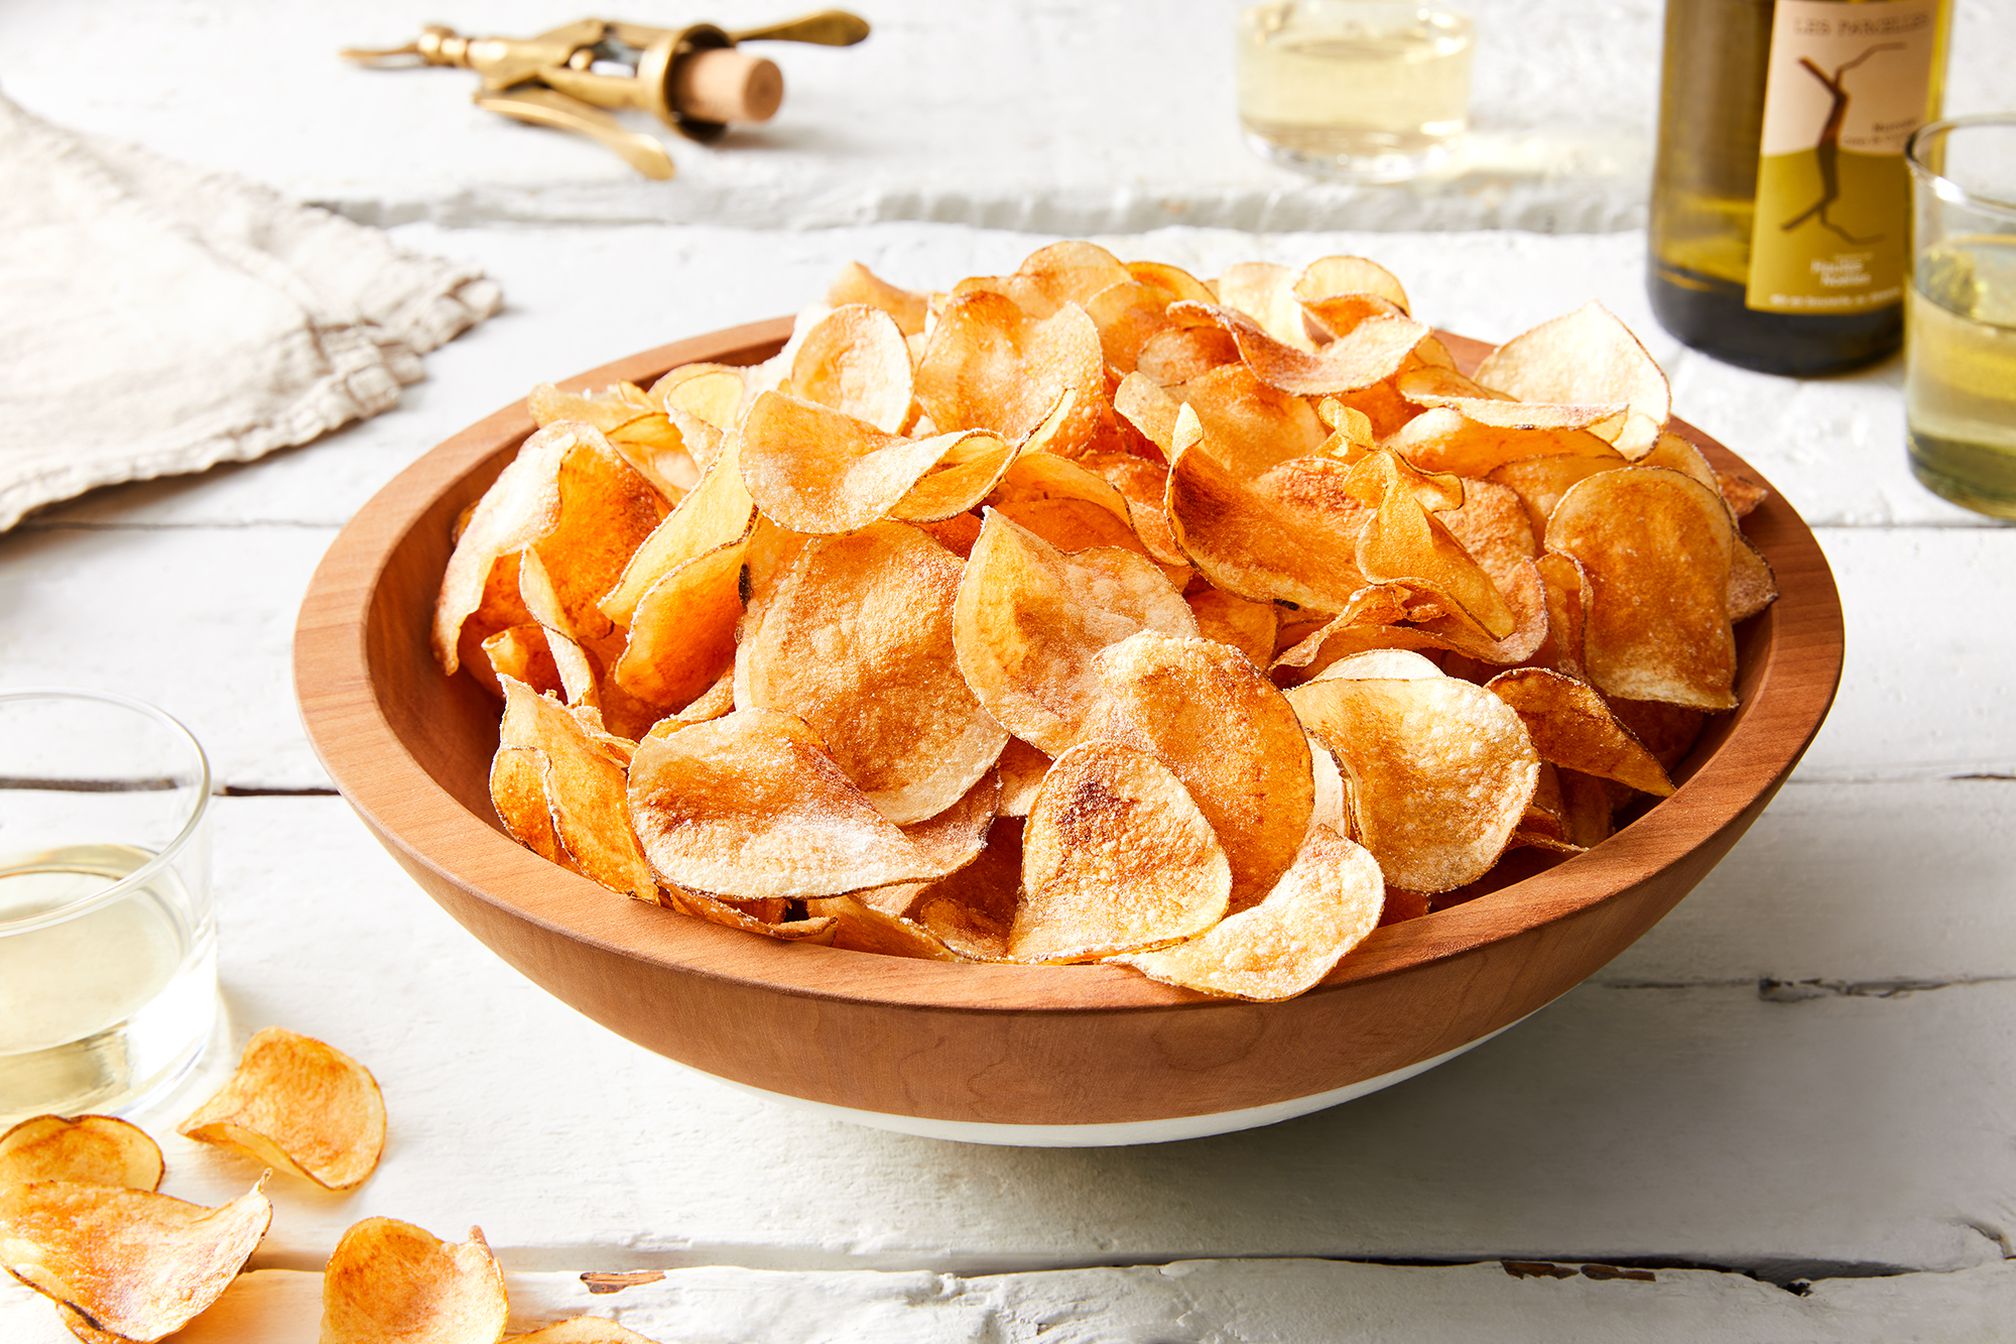 Best Homemade Chips Recipe - How To Make Homemade Potato Chips